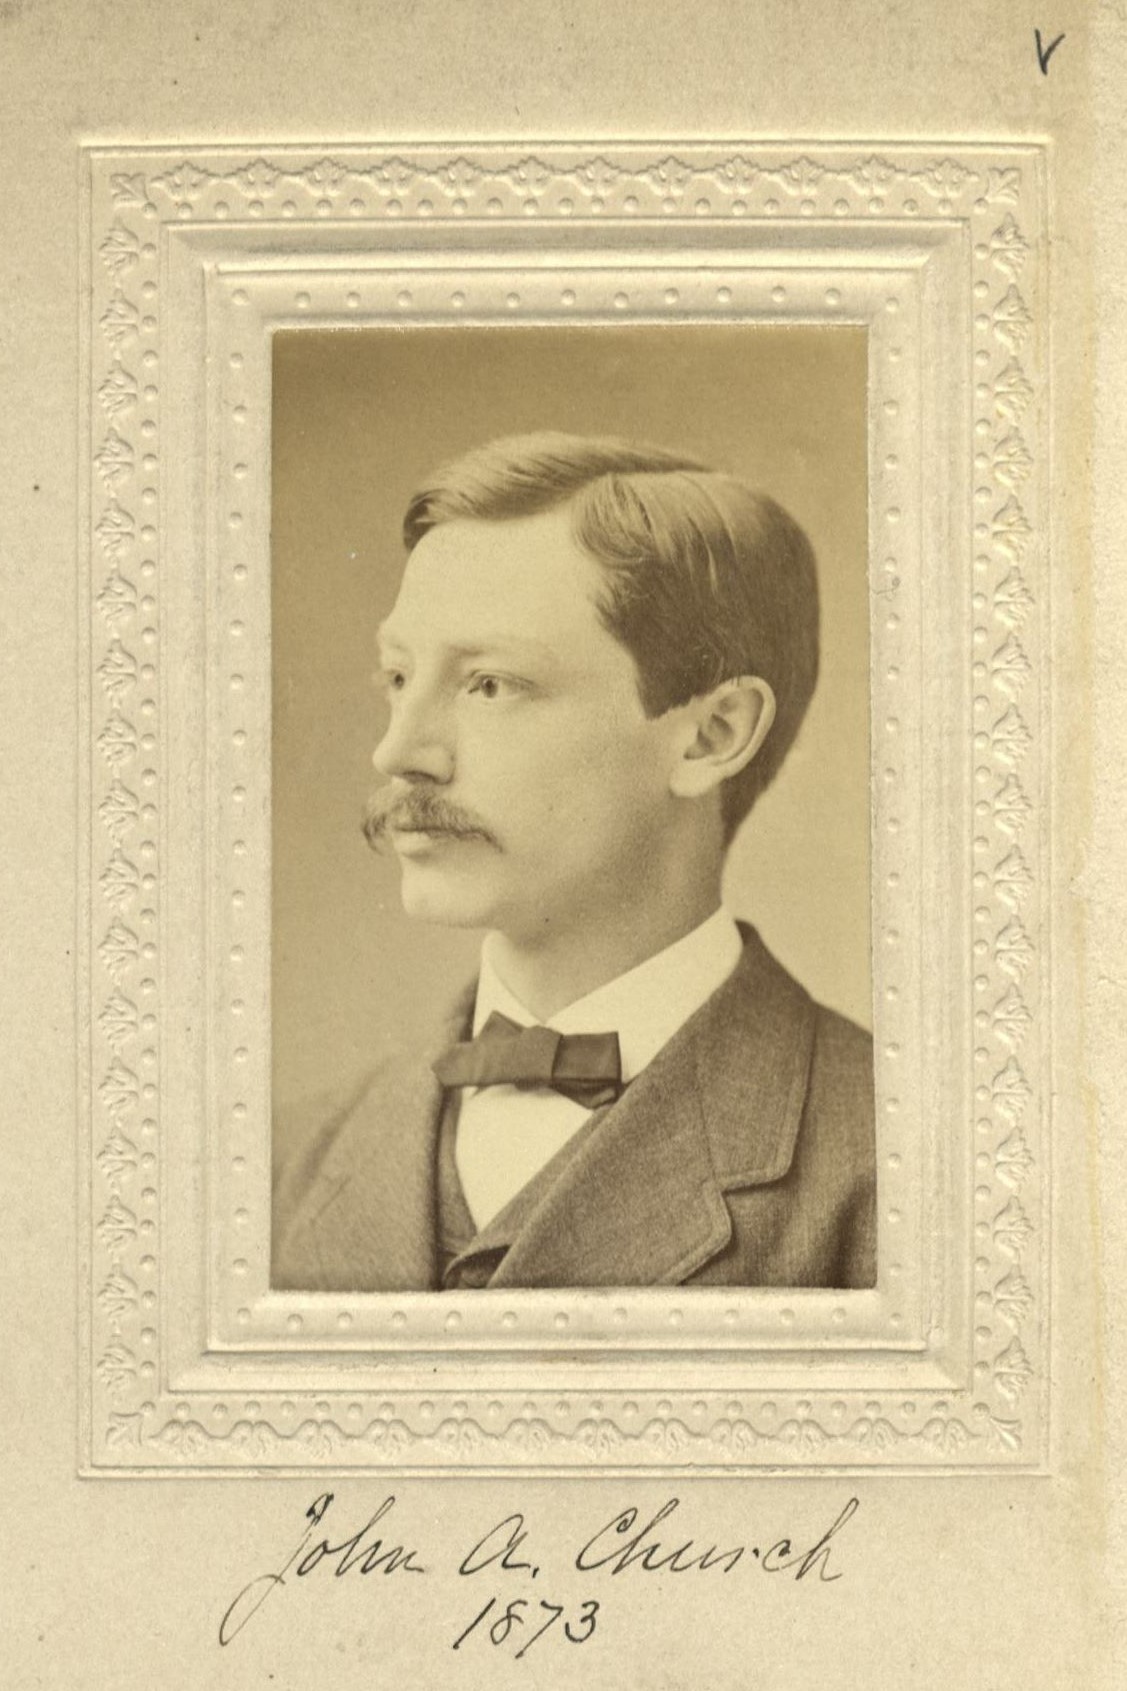 Member portrait of John A. Church